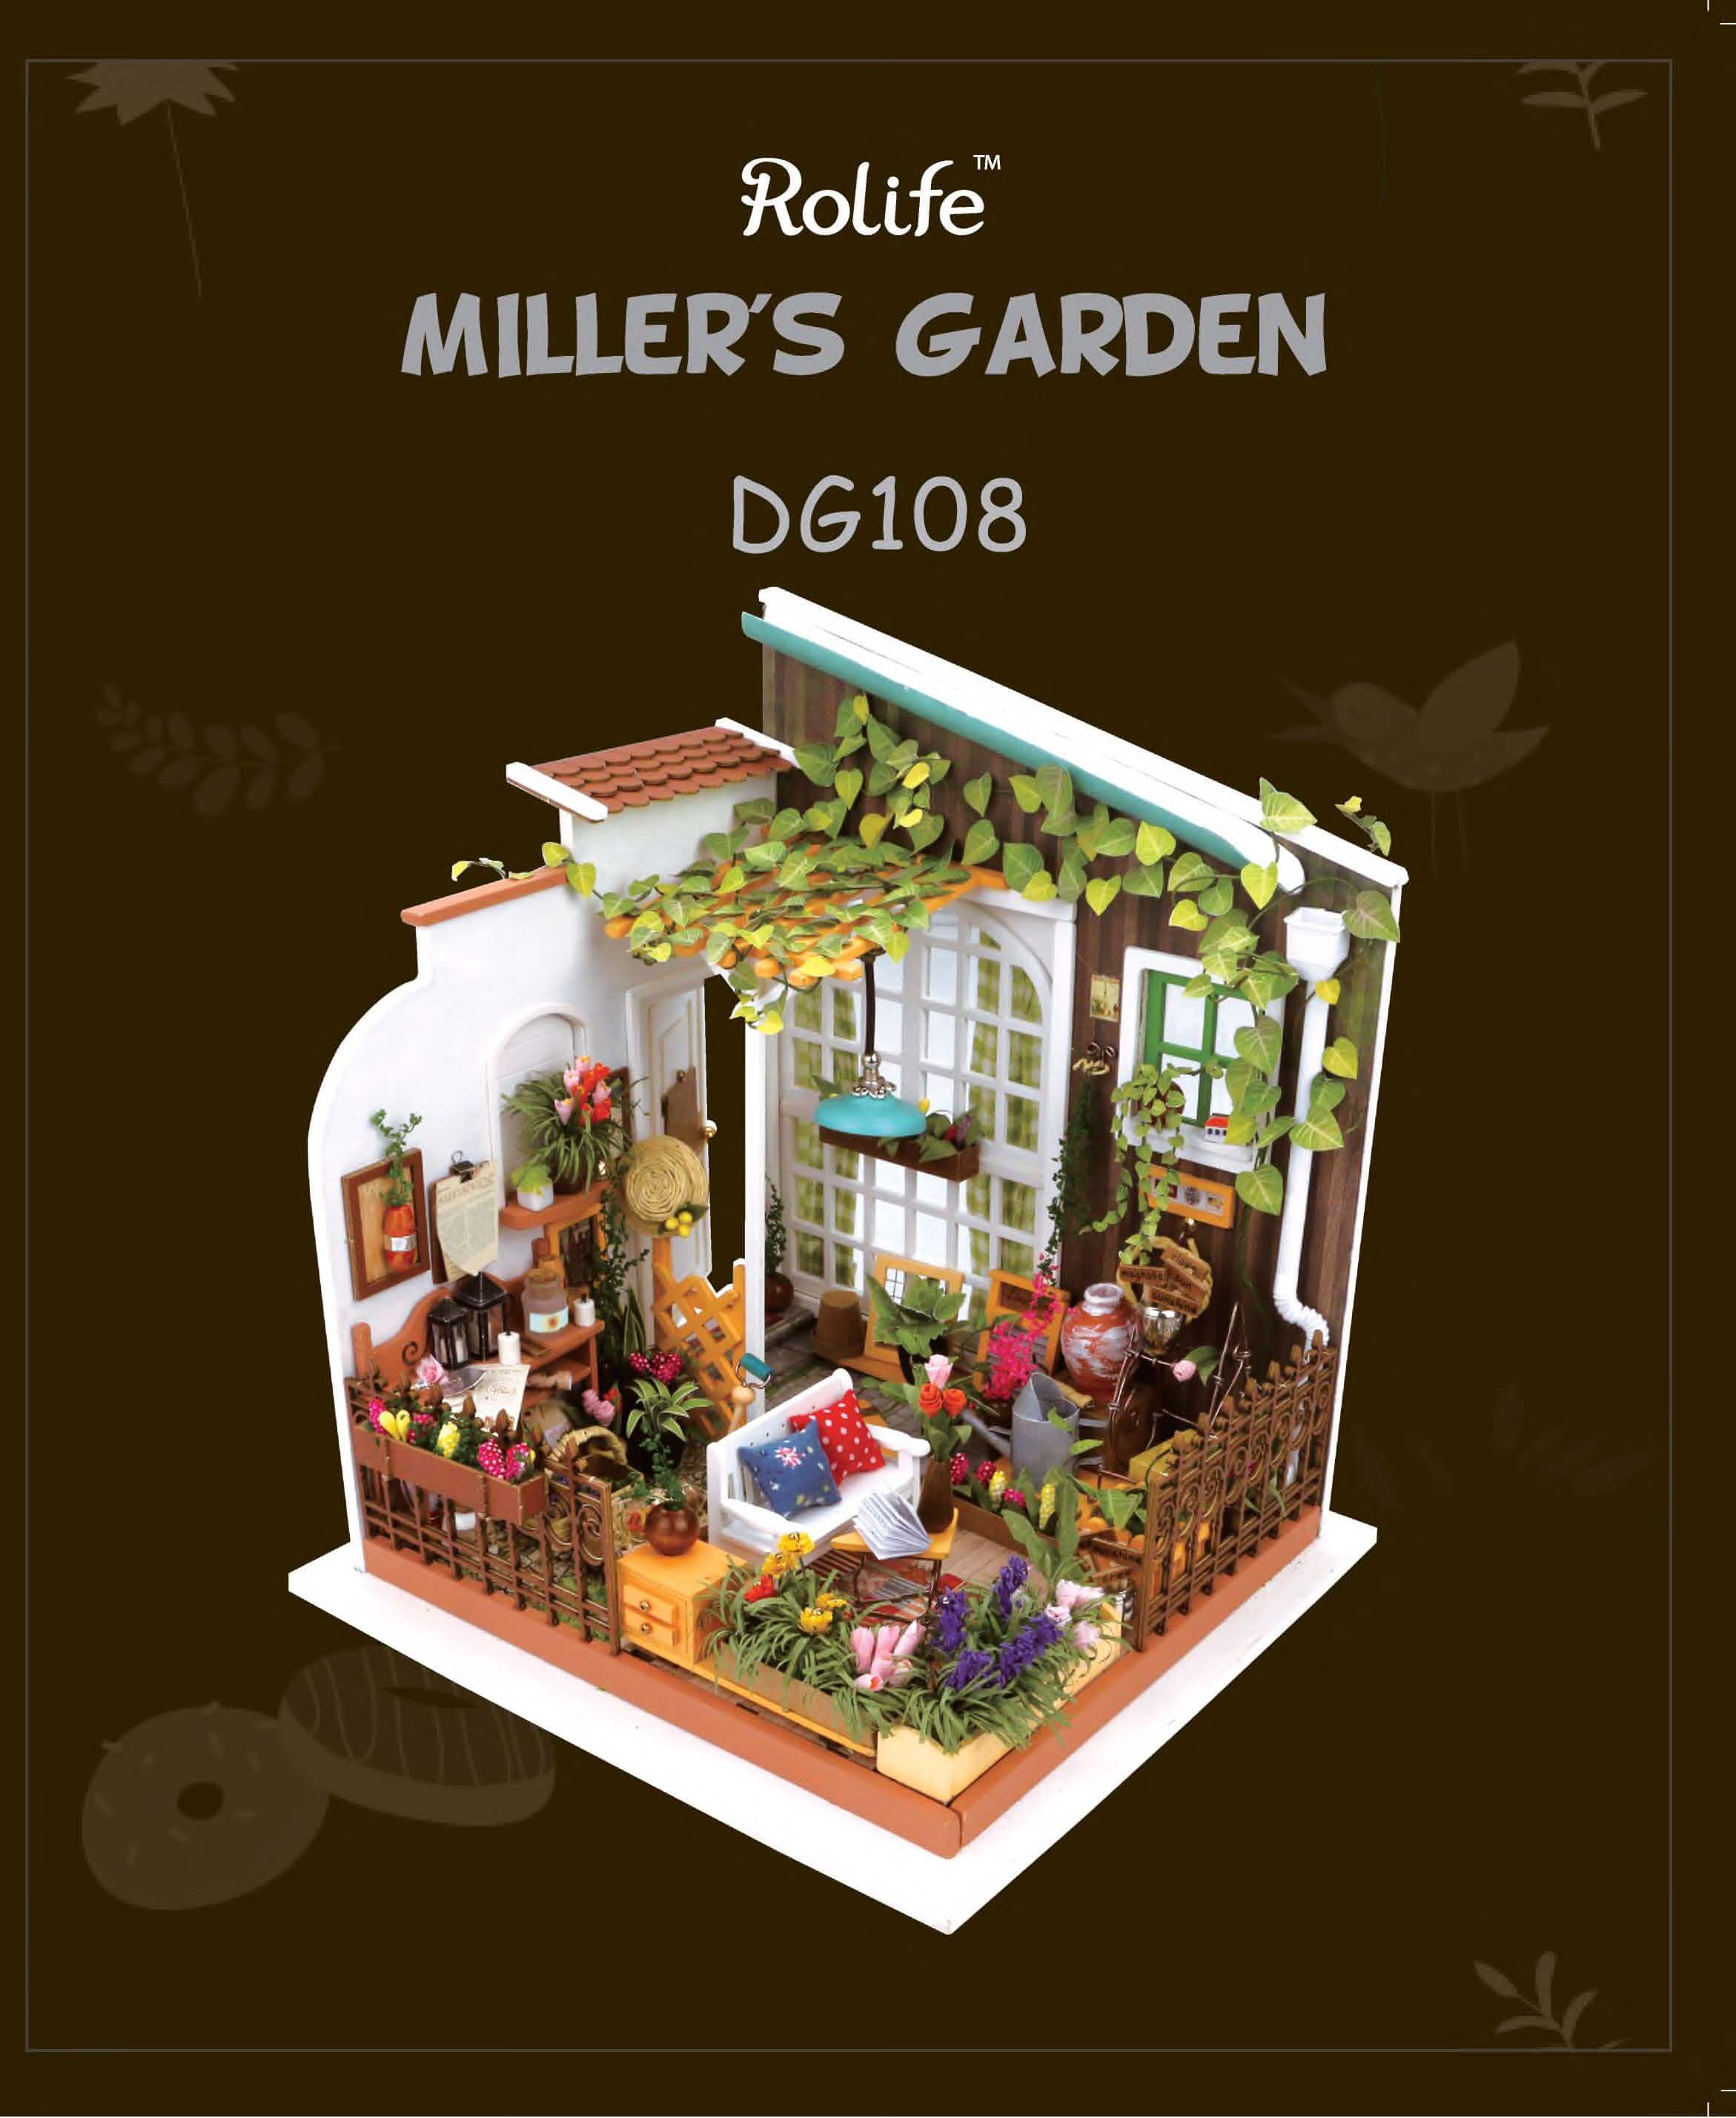 RDG108 - Miller's Garden Manual